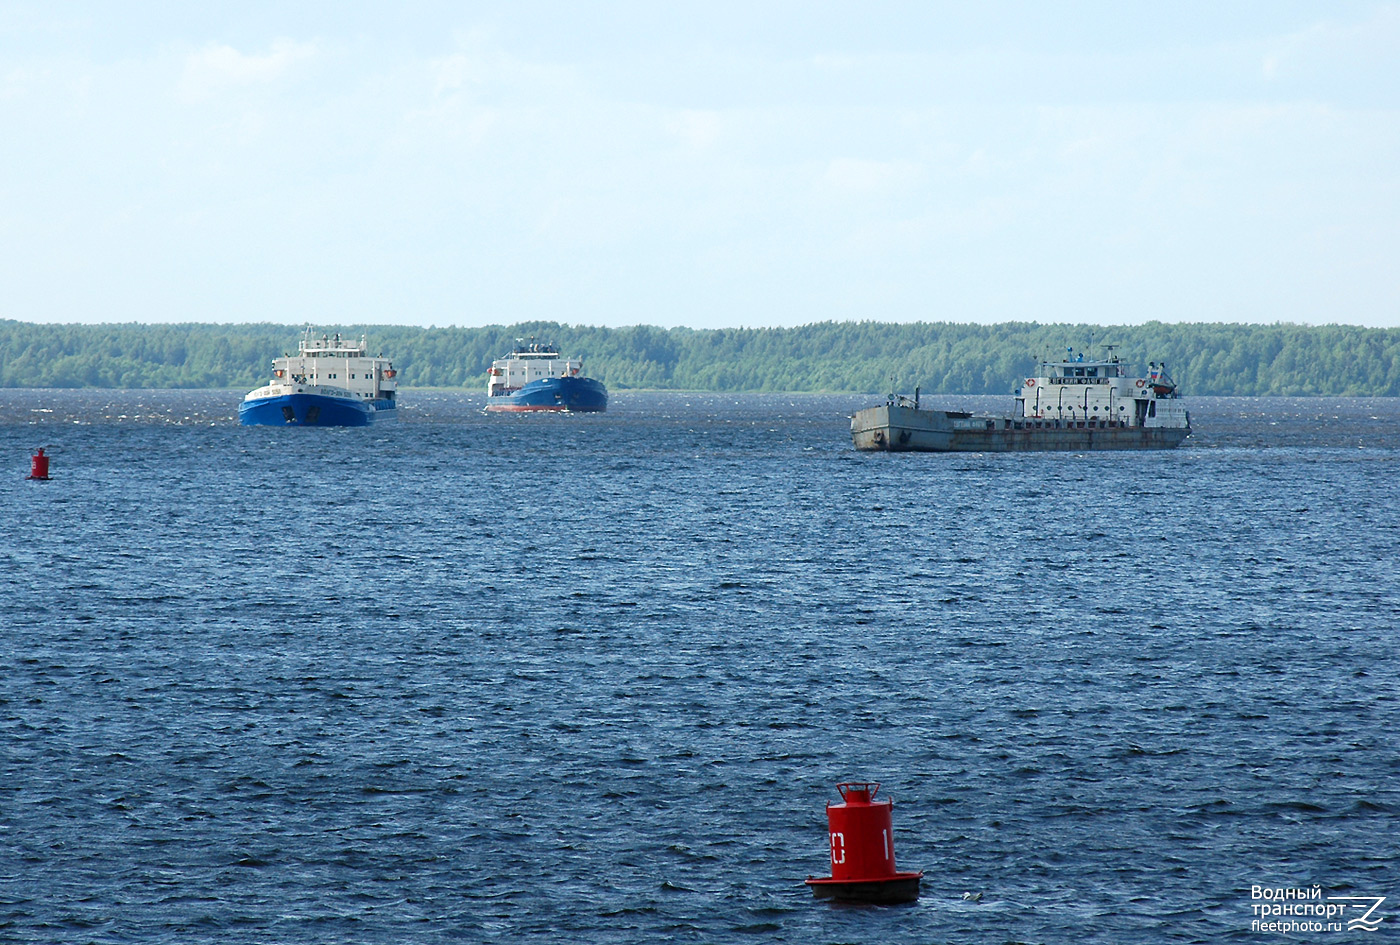 Волго-Дон 5056, Кижи, Евгений Флягин. Volga-Baltic waterway, Photo Creativity